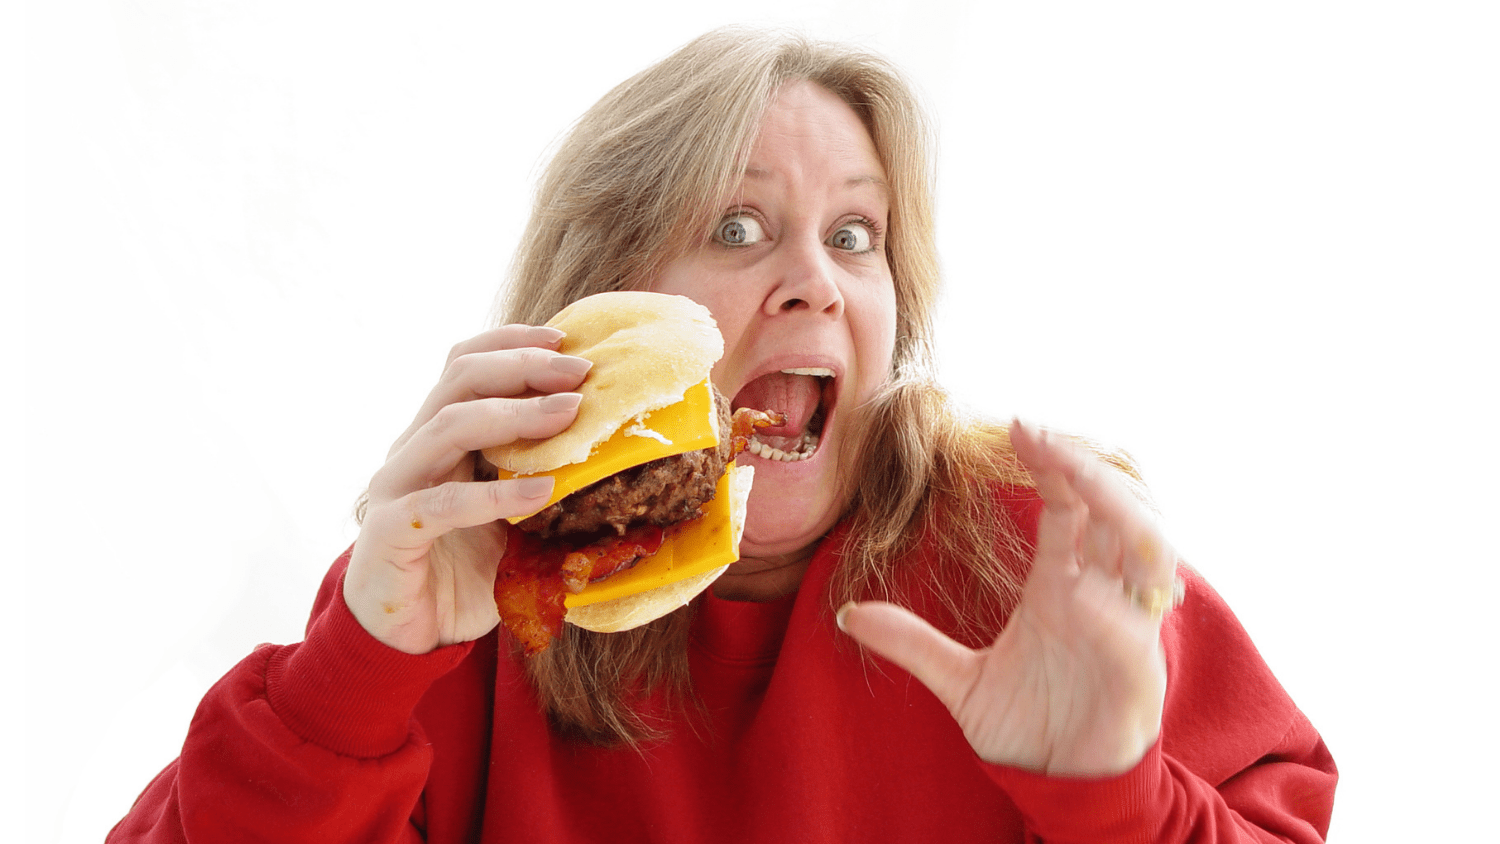 5 Ways to Control Your Binge Eating